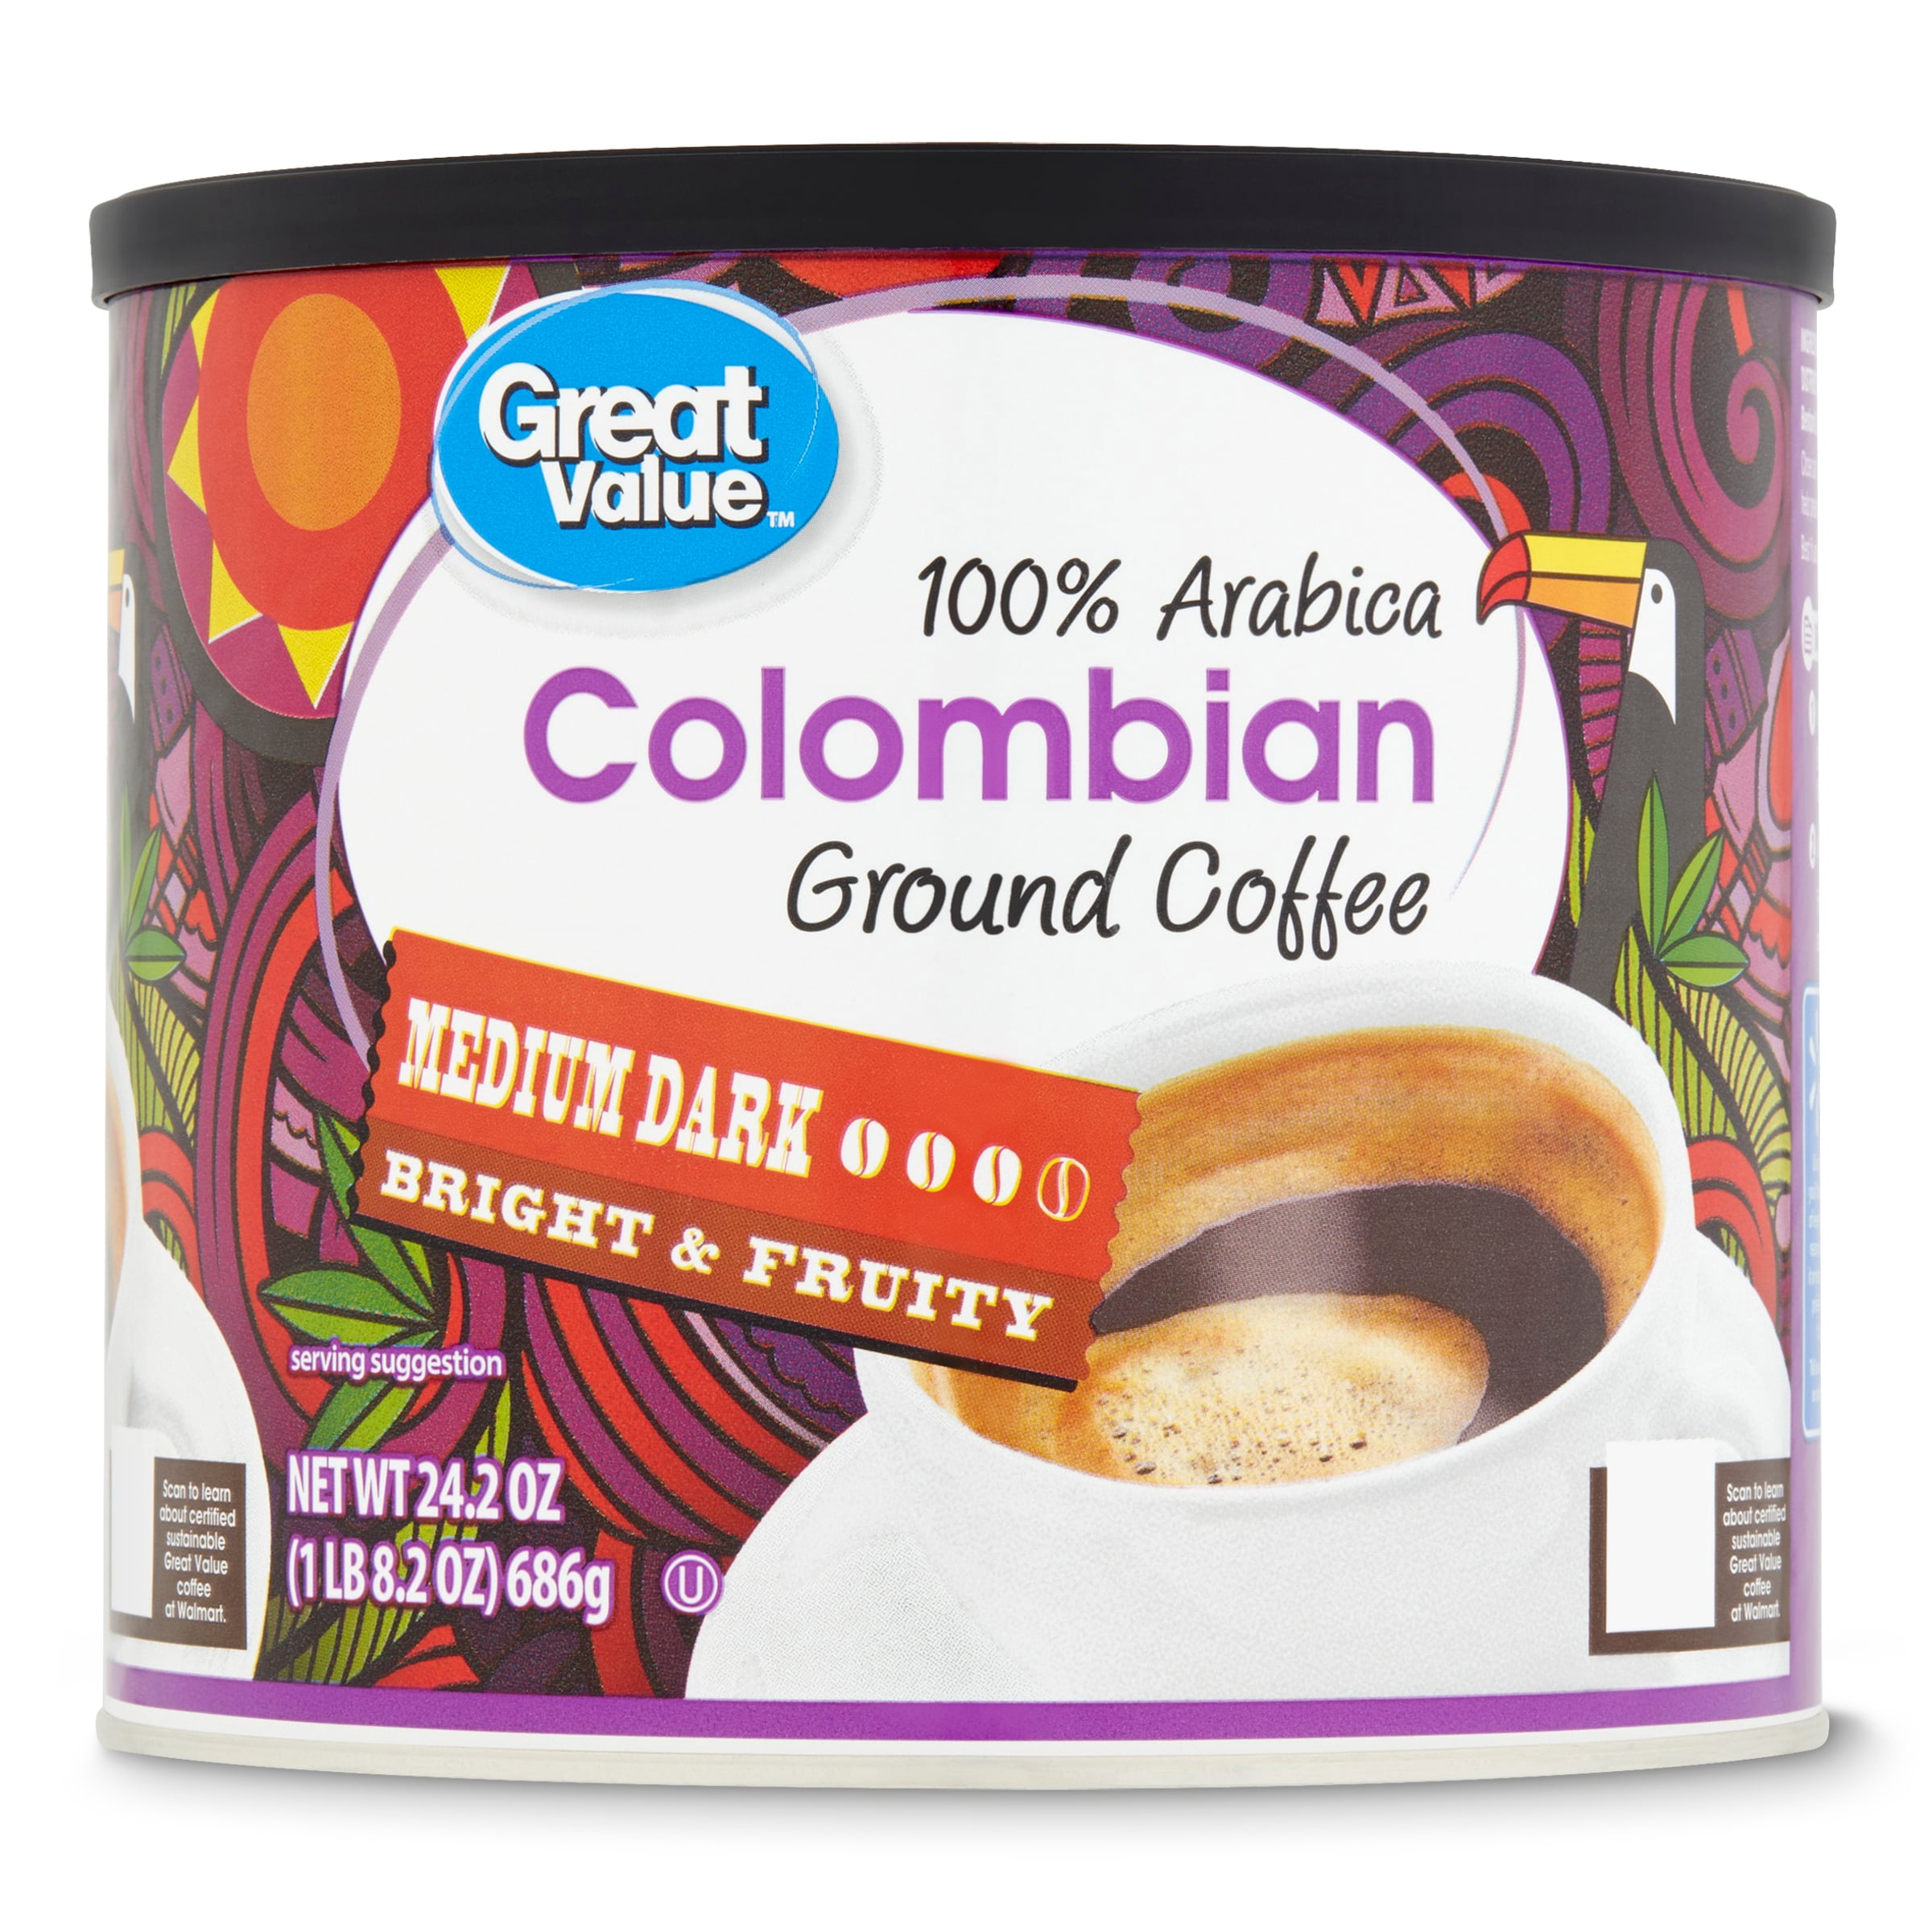 Great Value 100% Arabica Colombian Medium Dark Ground Coffee, 24.2 oz